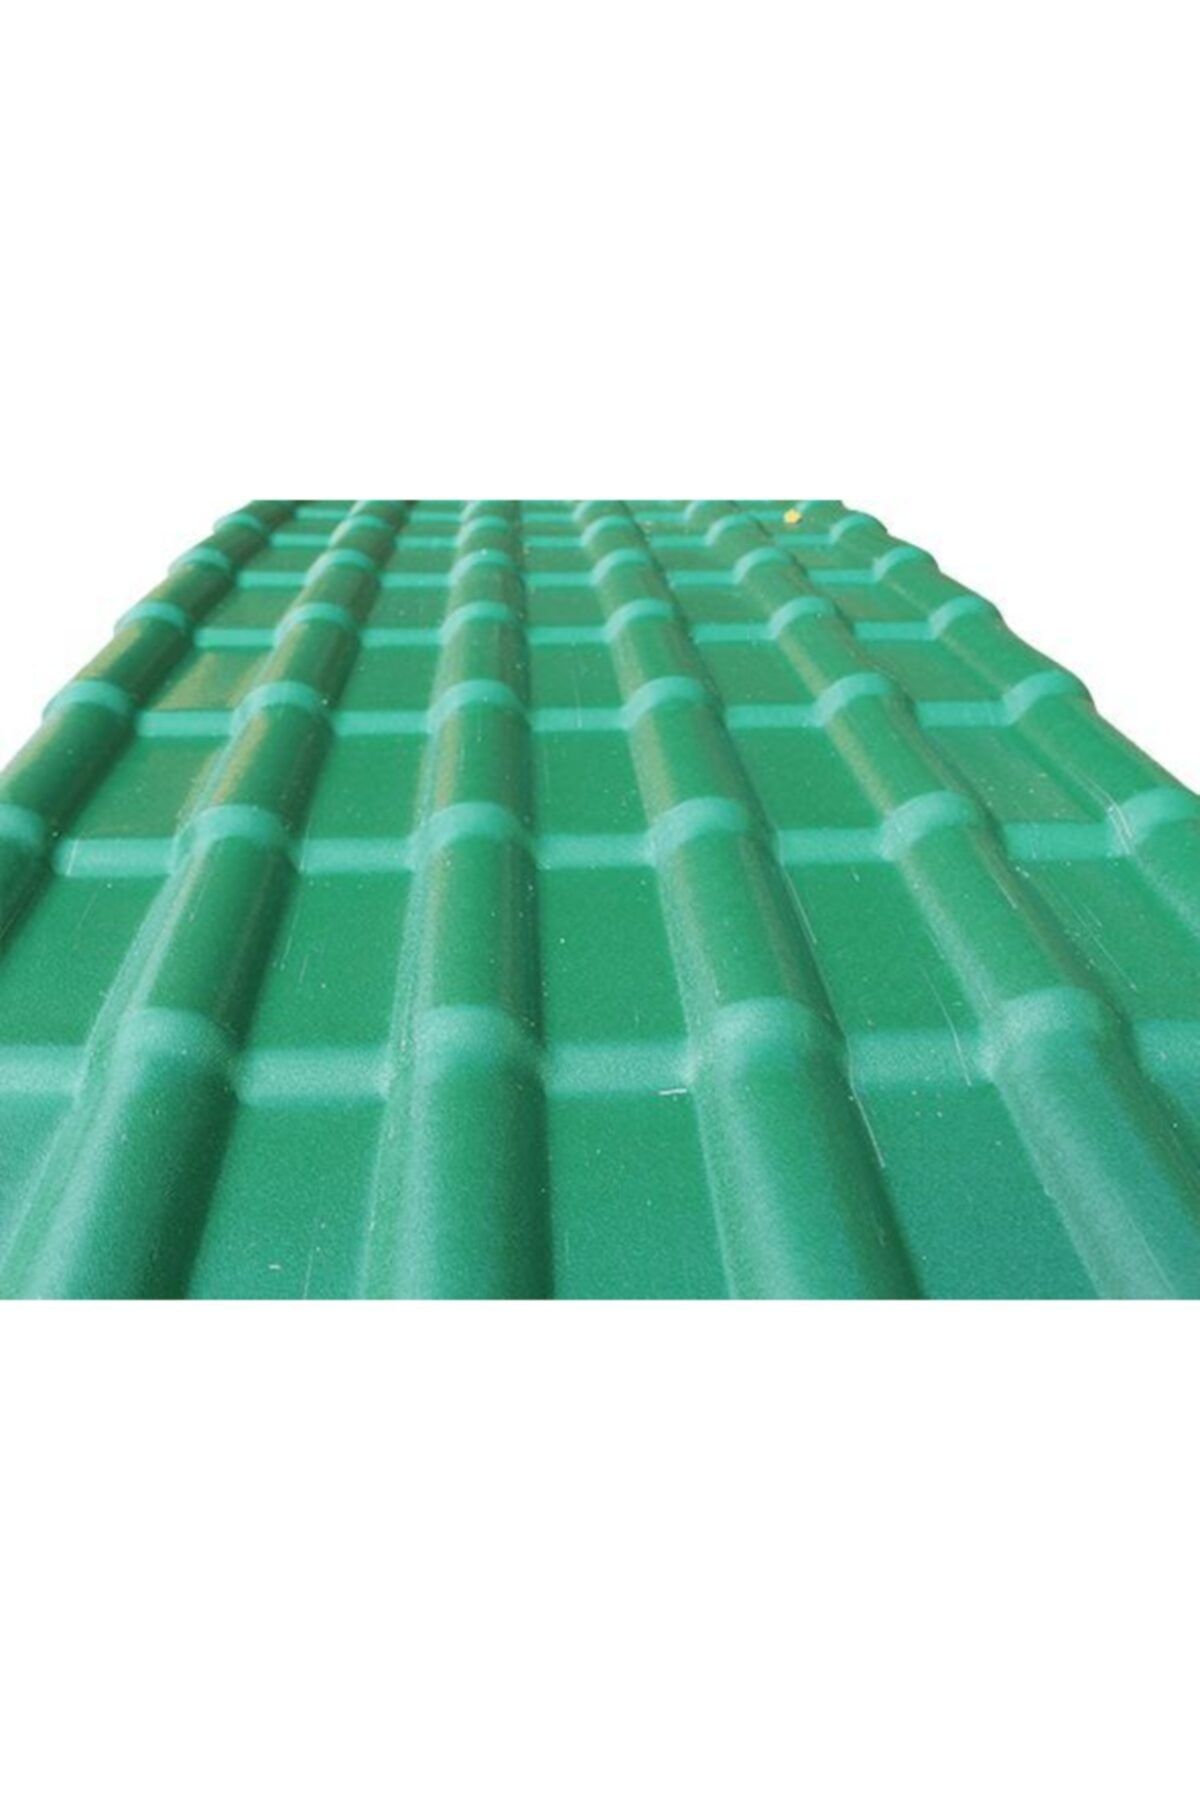 Ondumit Yeşil Pvc Polimer Çatı Kaplama Paneli 200cm 10 Adet